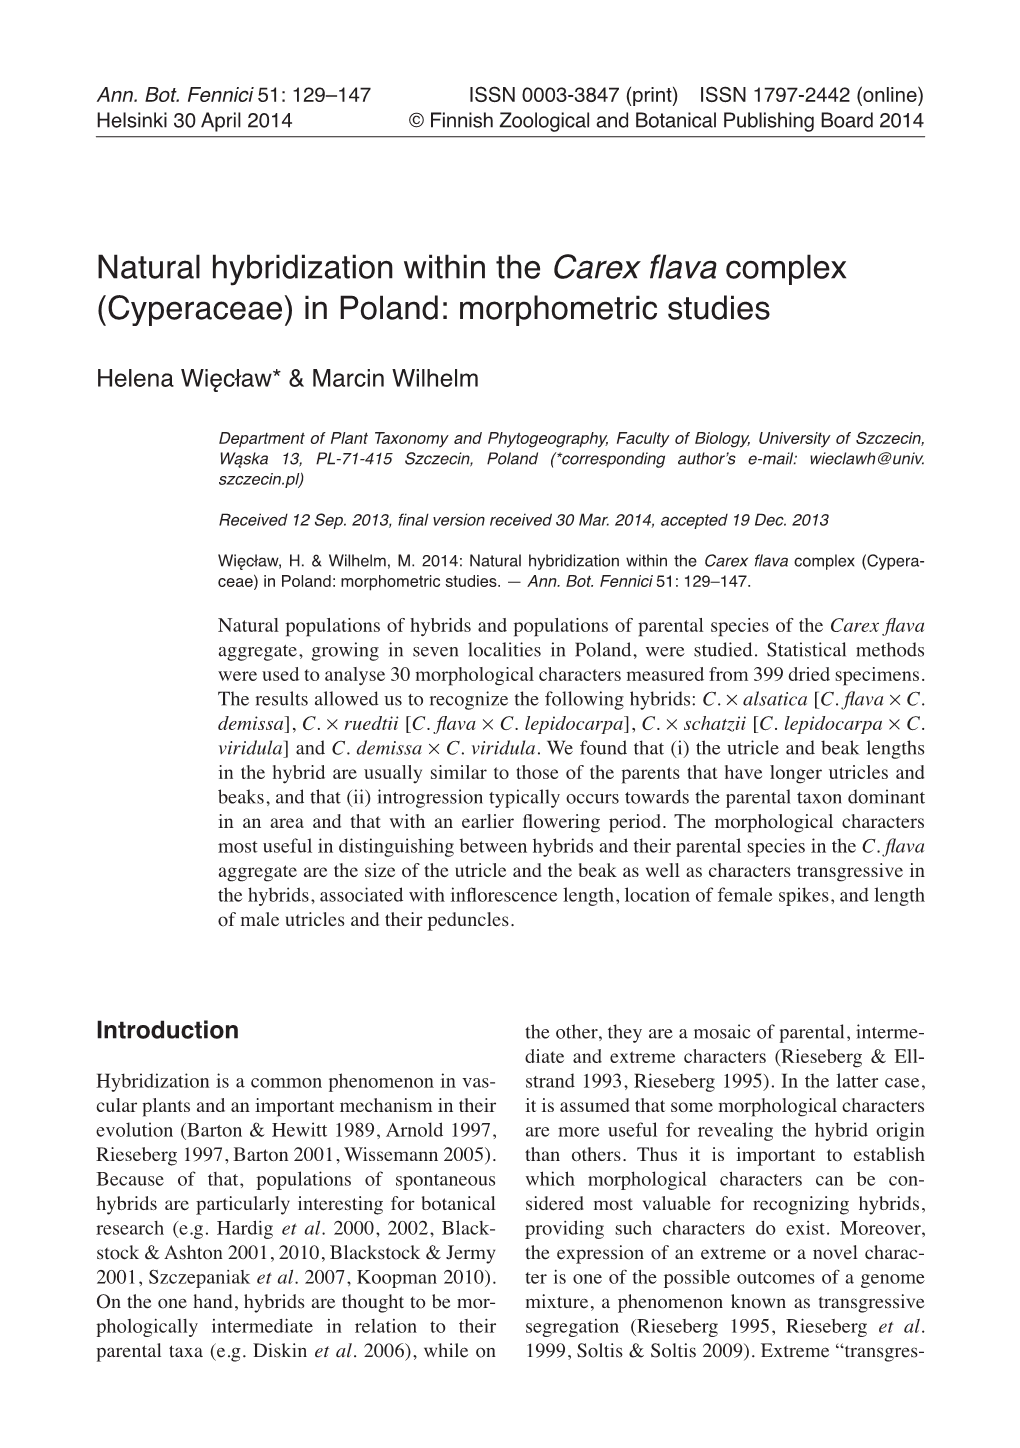 Carex Flava Complex (Cyperaceae) in Poland: Morphometric Studies